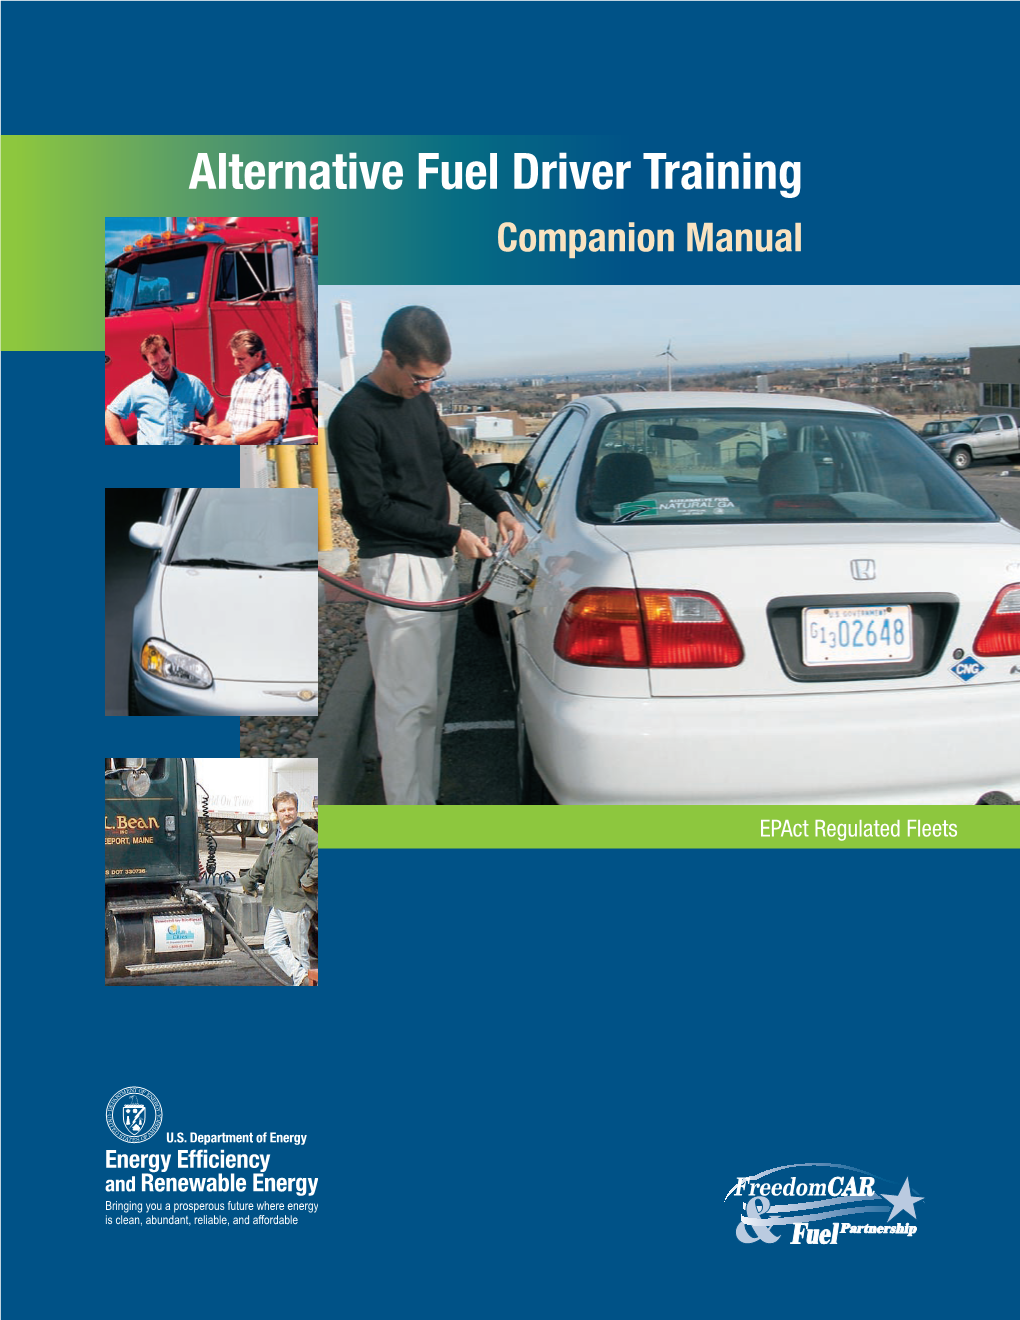 Alternative Fuel Driver Training Companion Manual